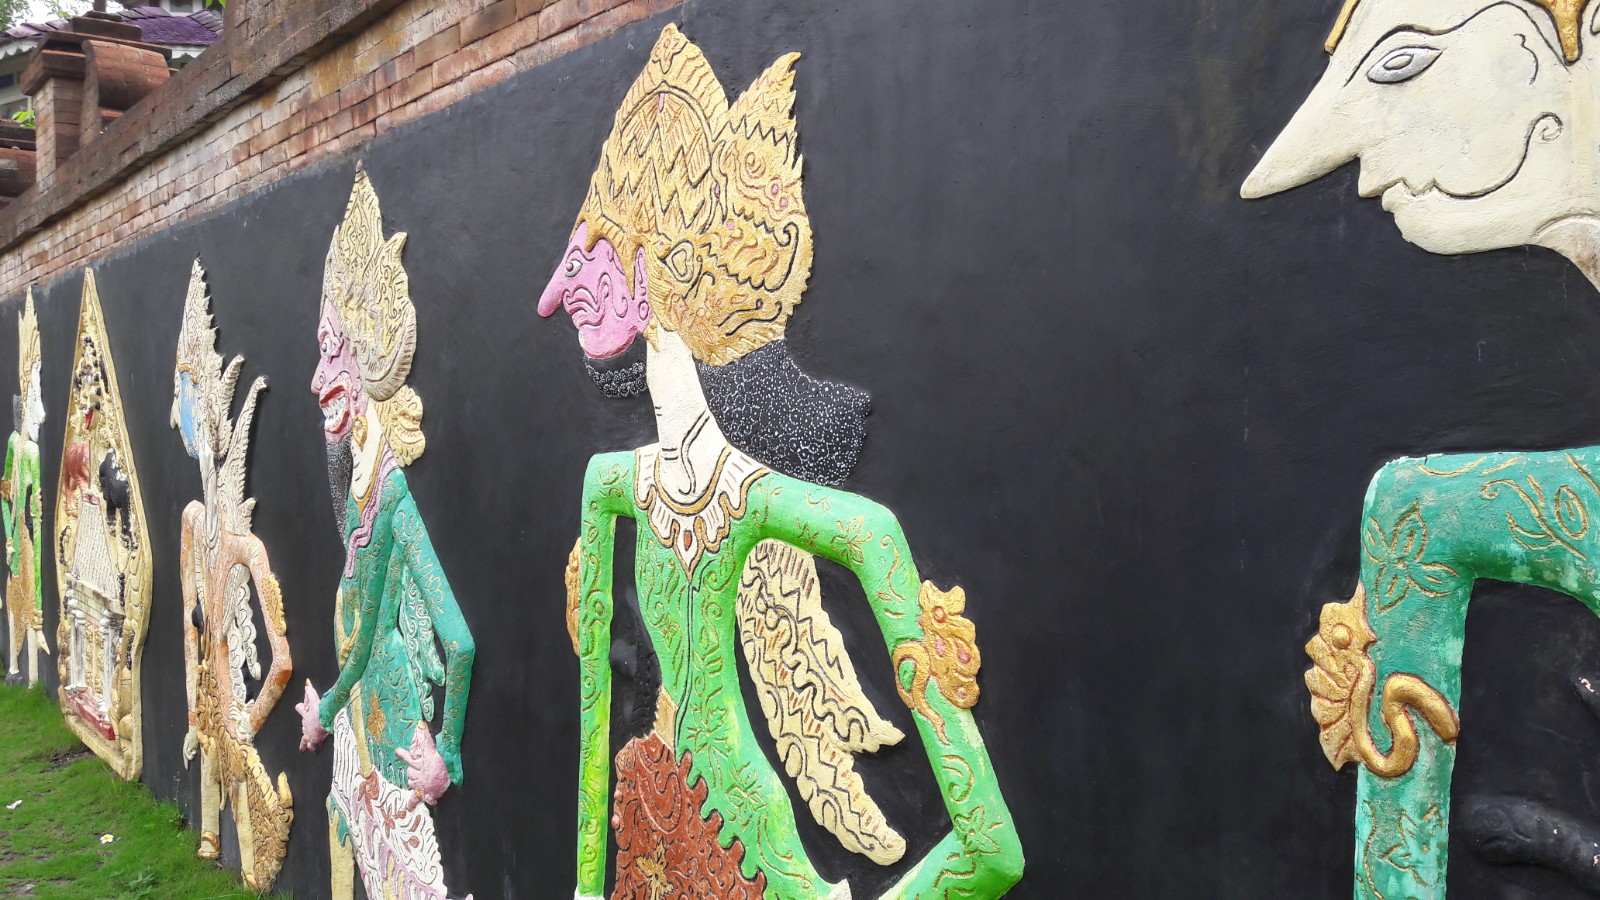 Hiasan Wayang di tembok (c) Annissa Saputri/Travelingyuk